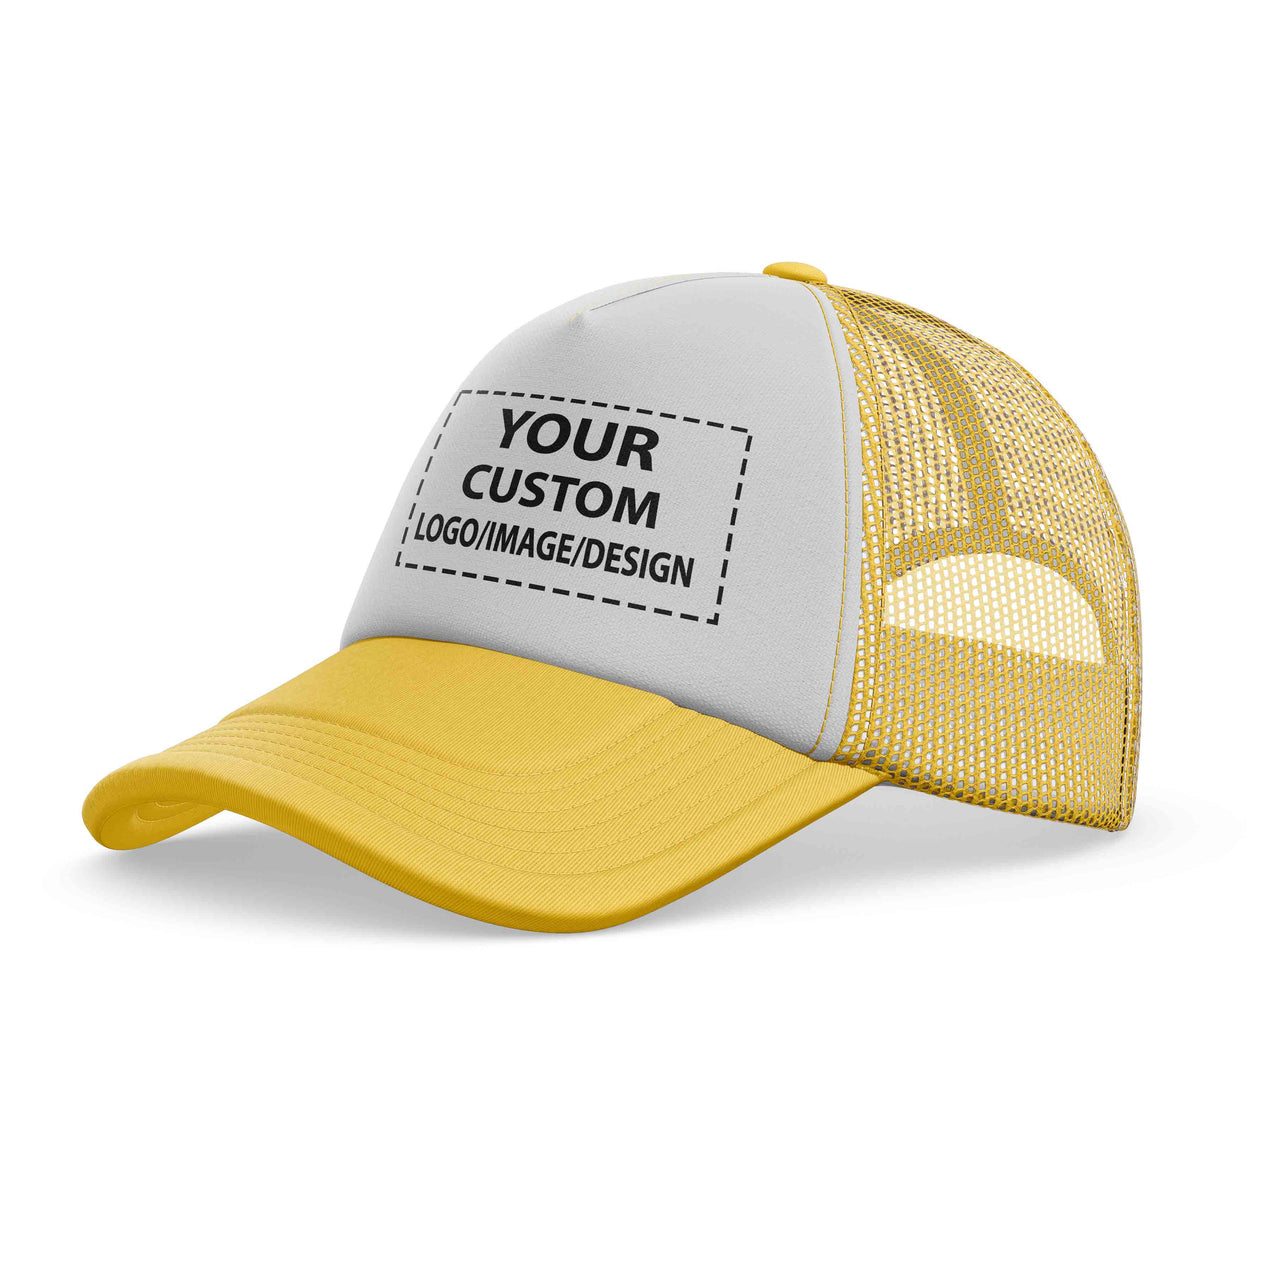 Custom Logo/Design/Image Designed Trucker Caps & Hats